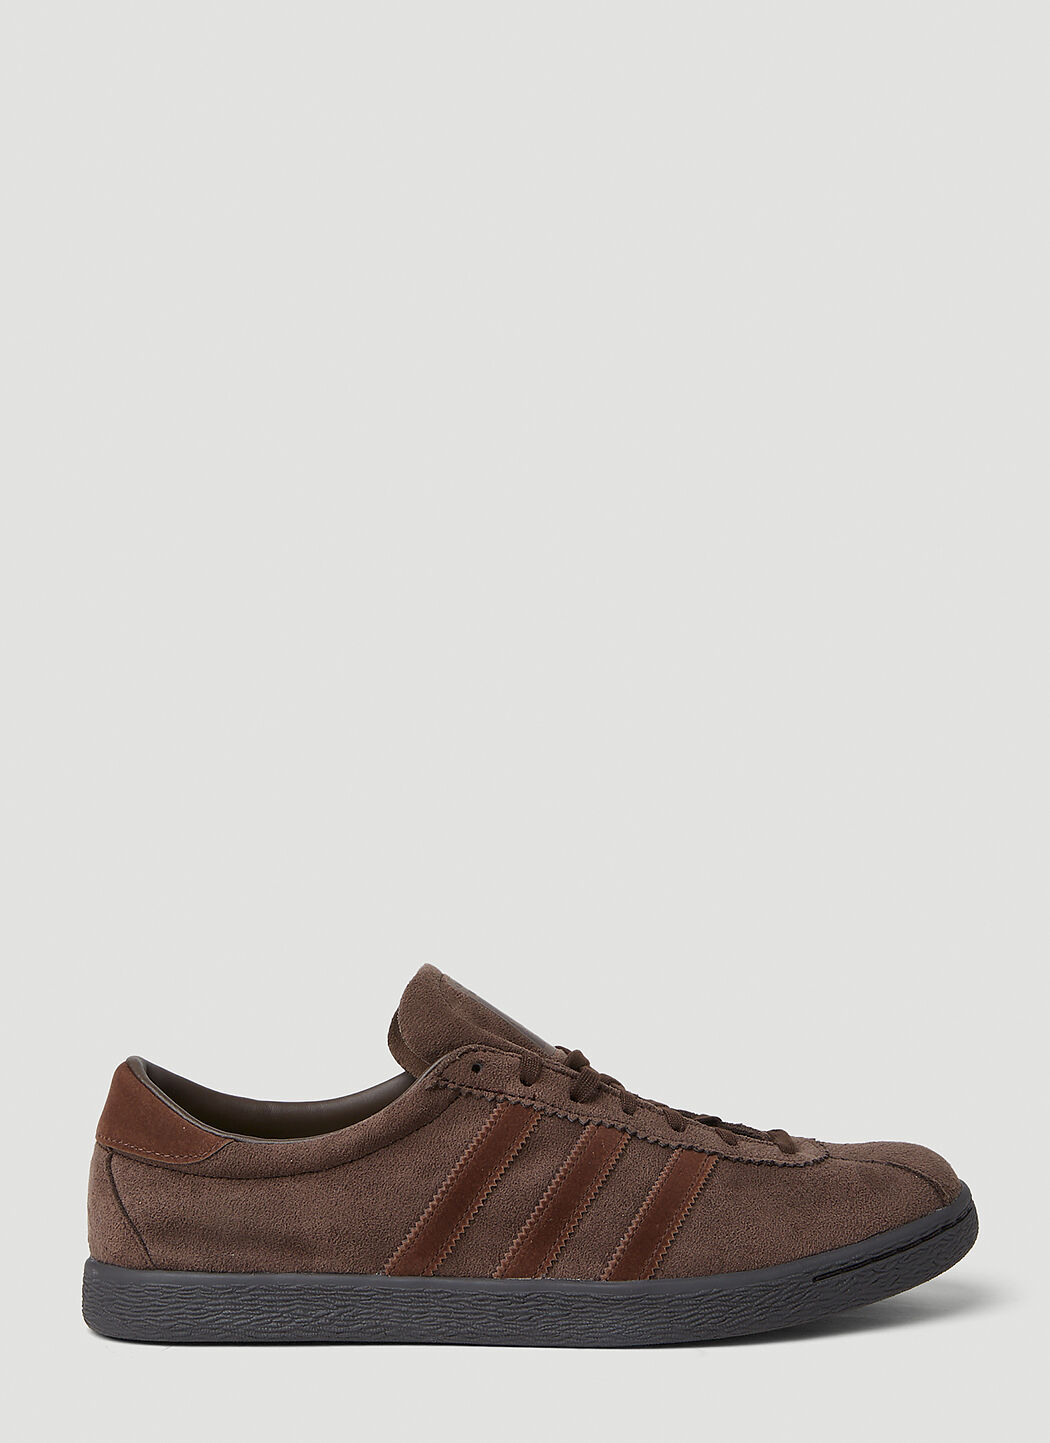 adidas Tobacco Gruen Sneakers in Brown | LN-CC®